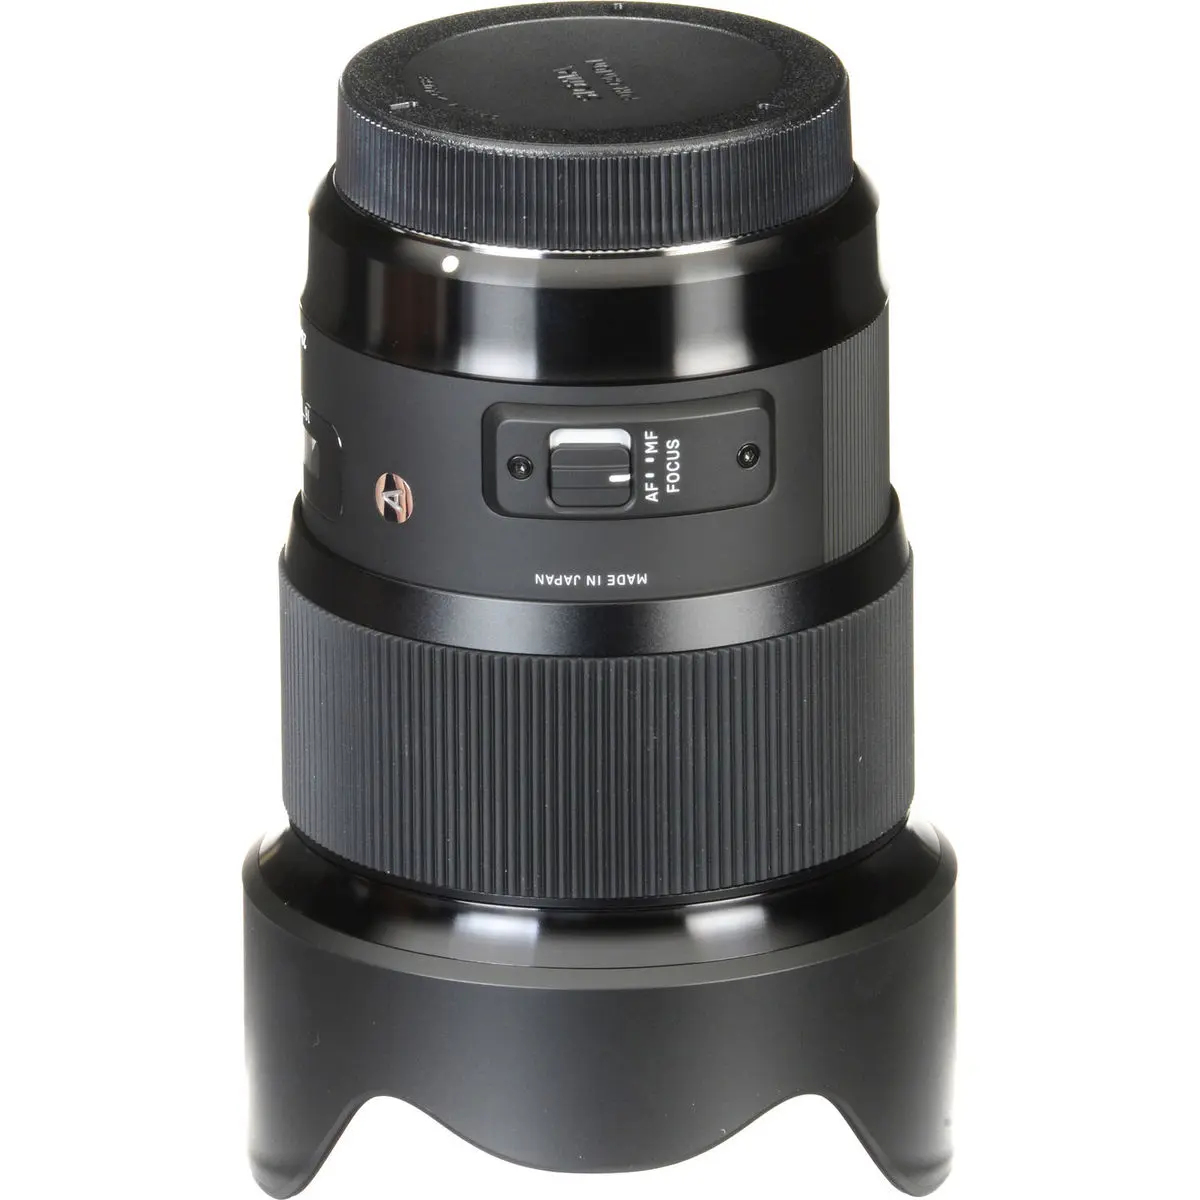 5. Sigma 20mm F1.4 DG HSM | A (Canon) Lens